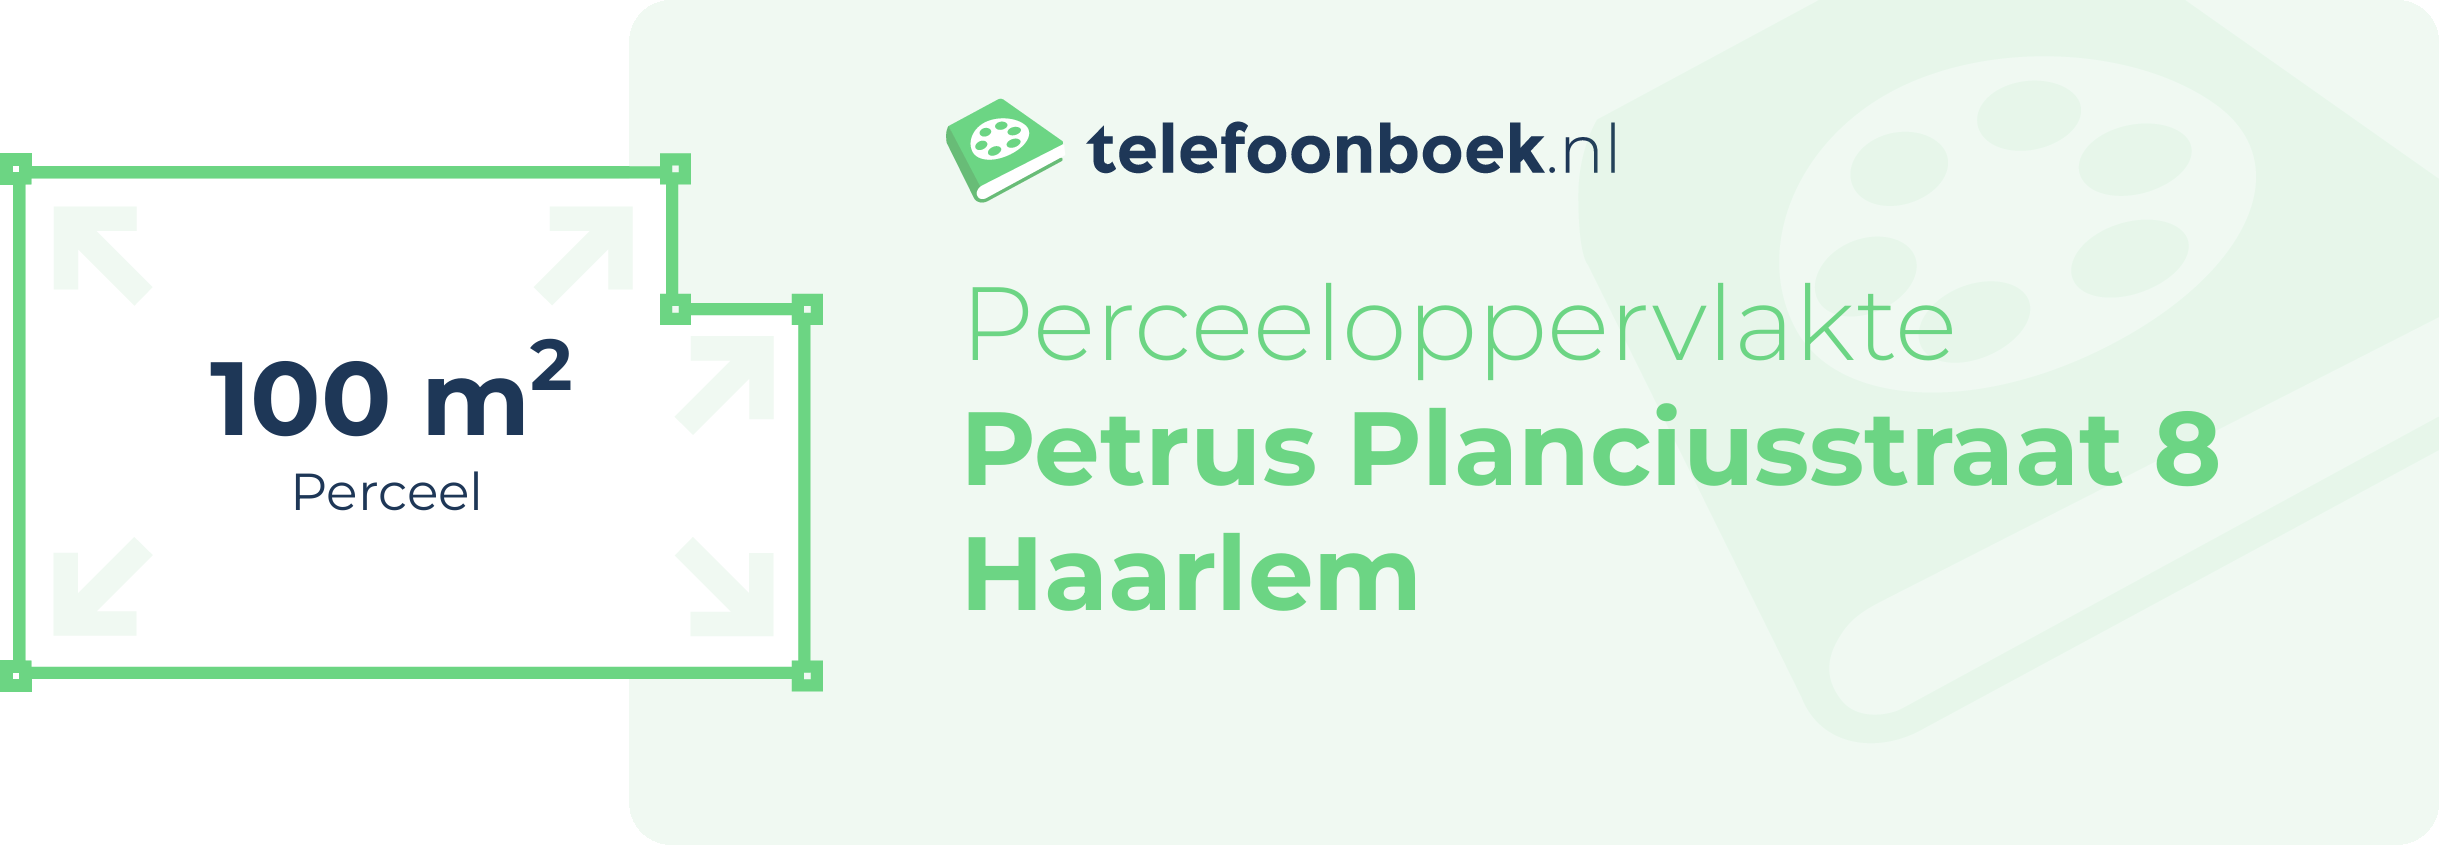 Perceeloppervlakte Petrus Planciusstraat 8 Haarlem